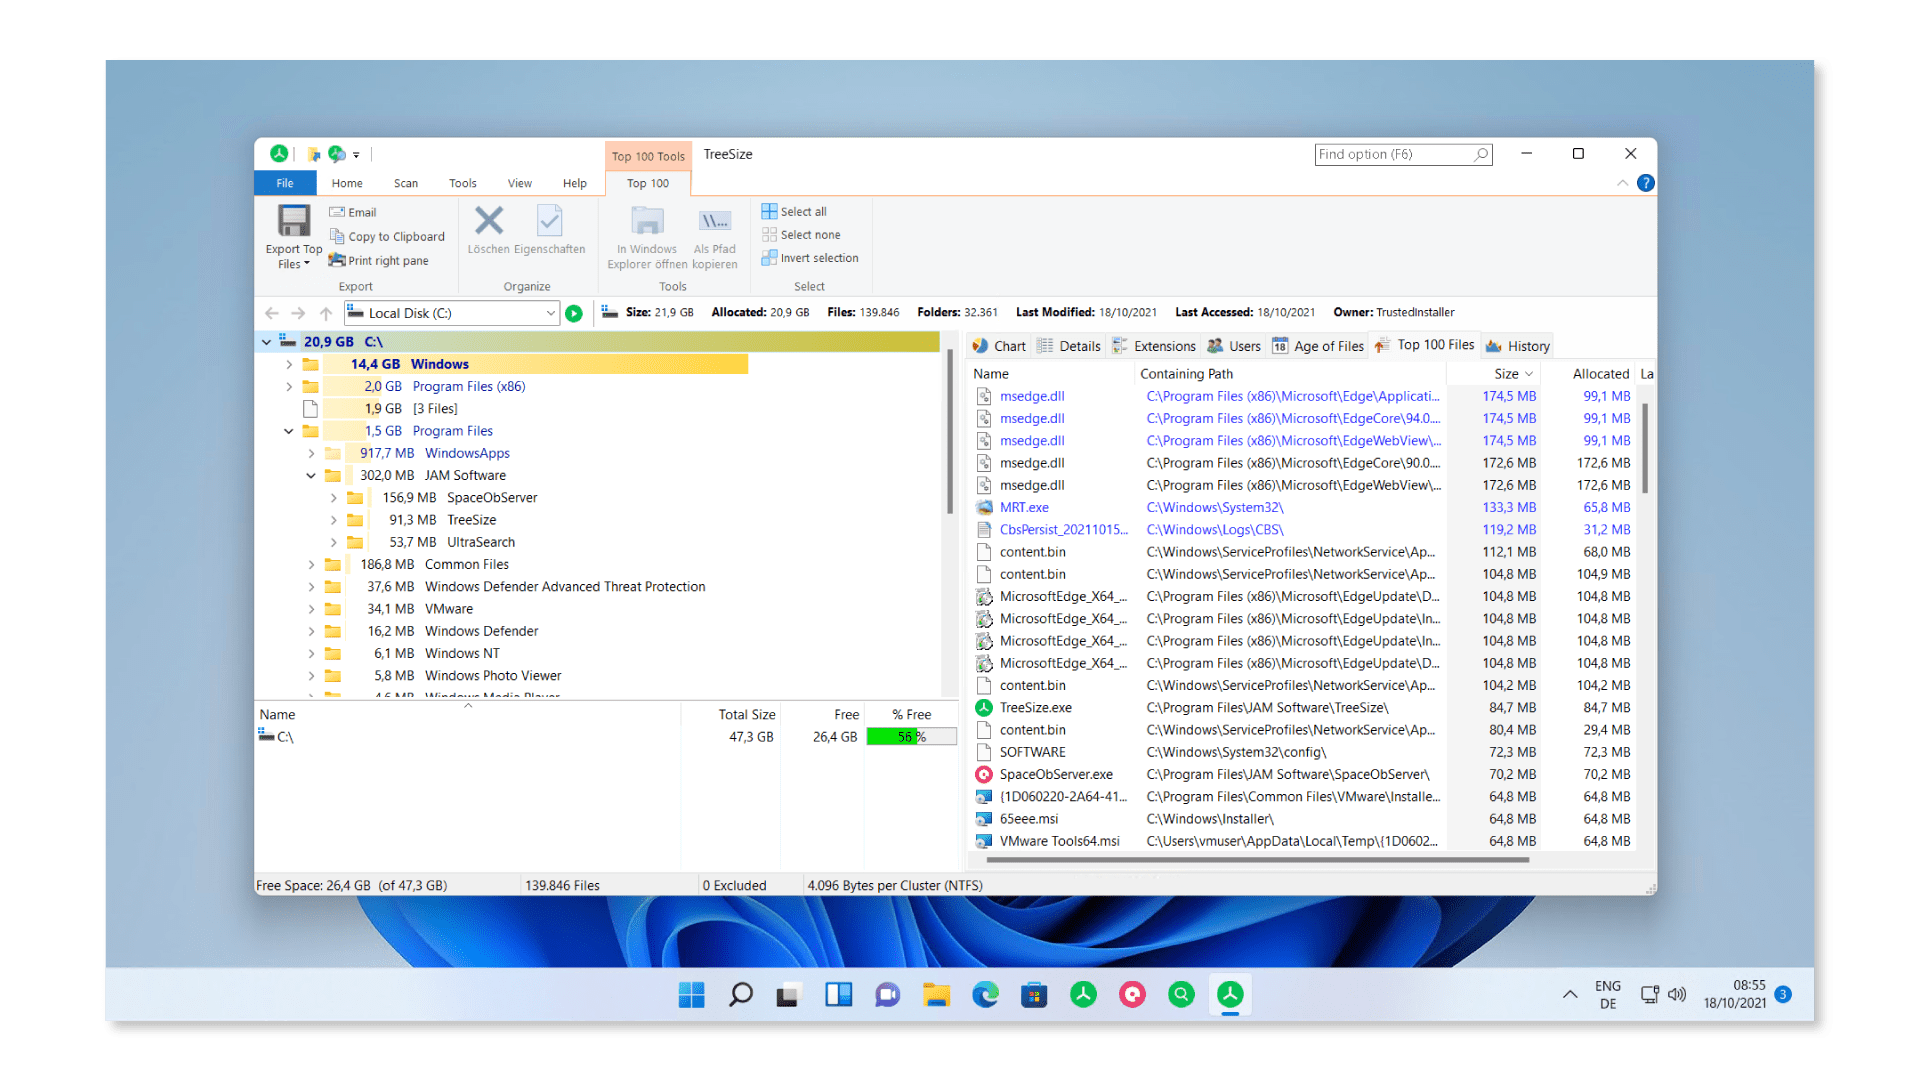 TreeSize Top 100 Files in Windows 11